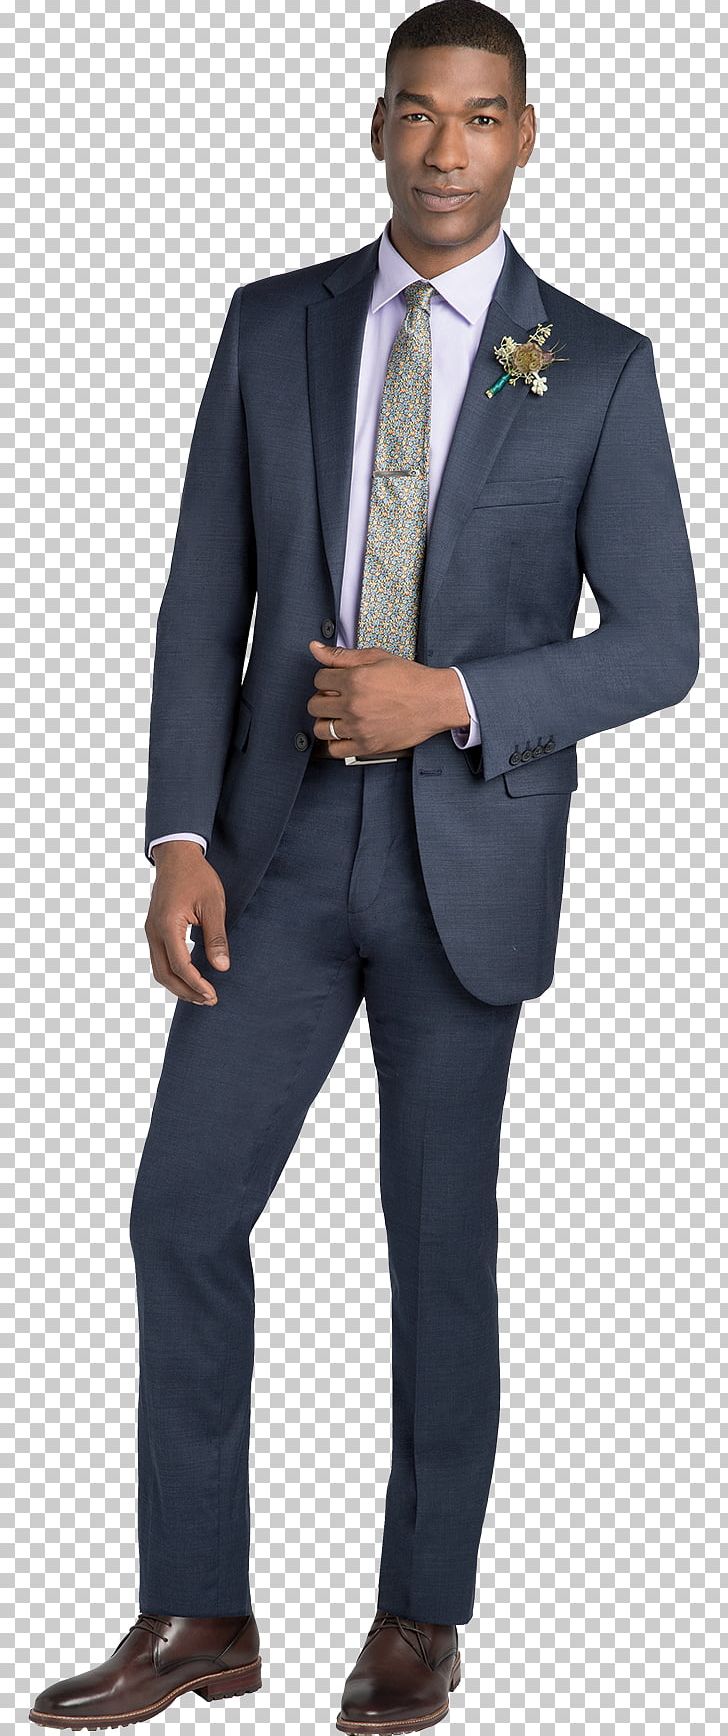 Tuxedo Suit Fashion Clothing Lapel PNG, Clipart, Belt, Blazer, Business, Business Executive, Businessperson Free PNG Download